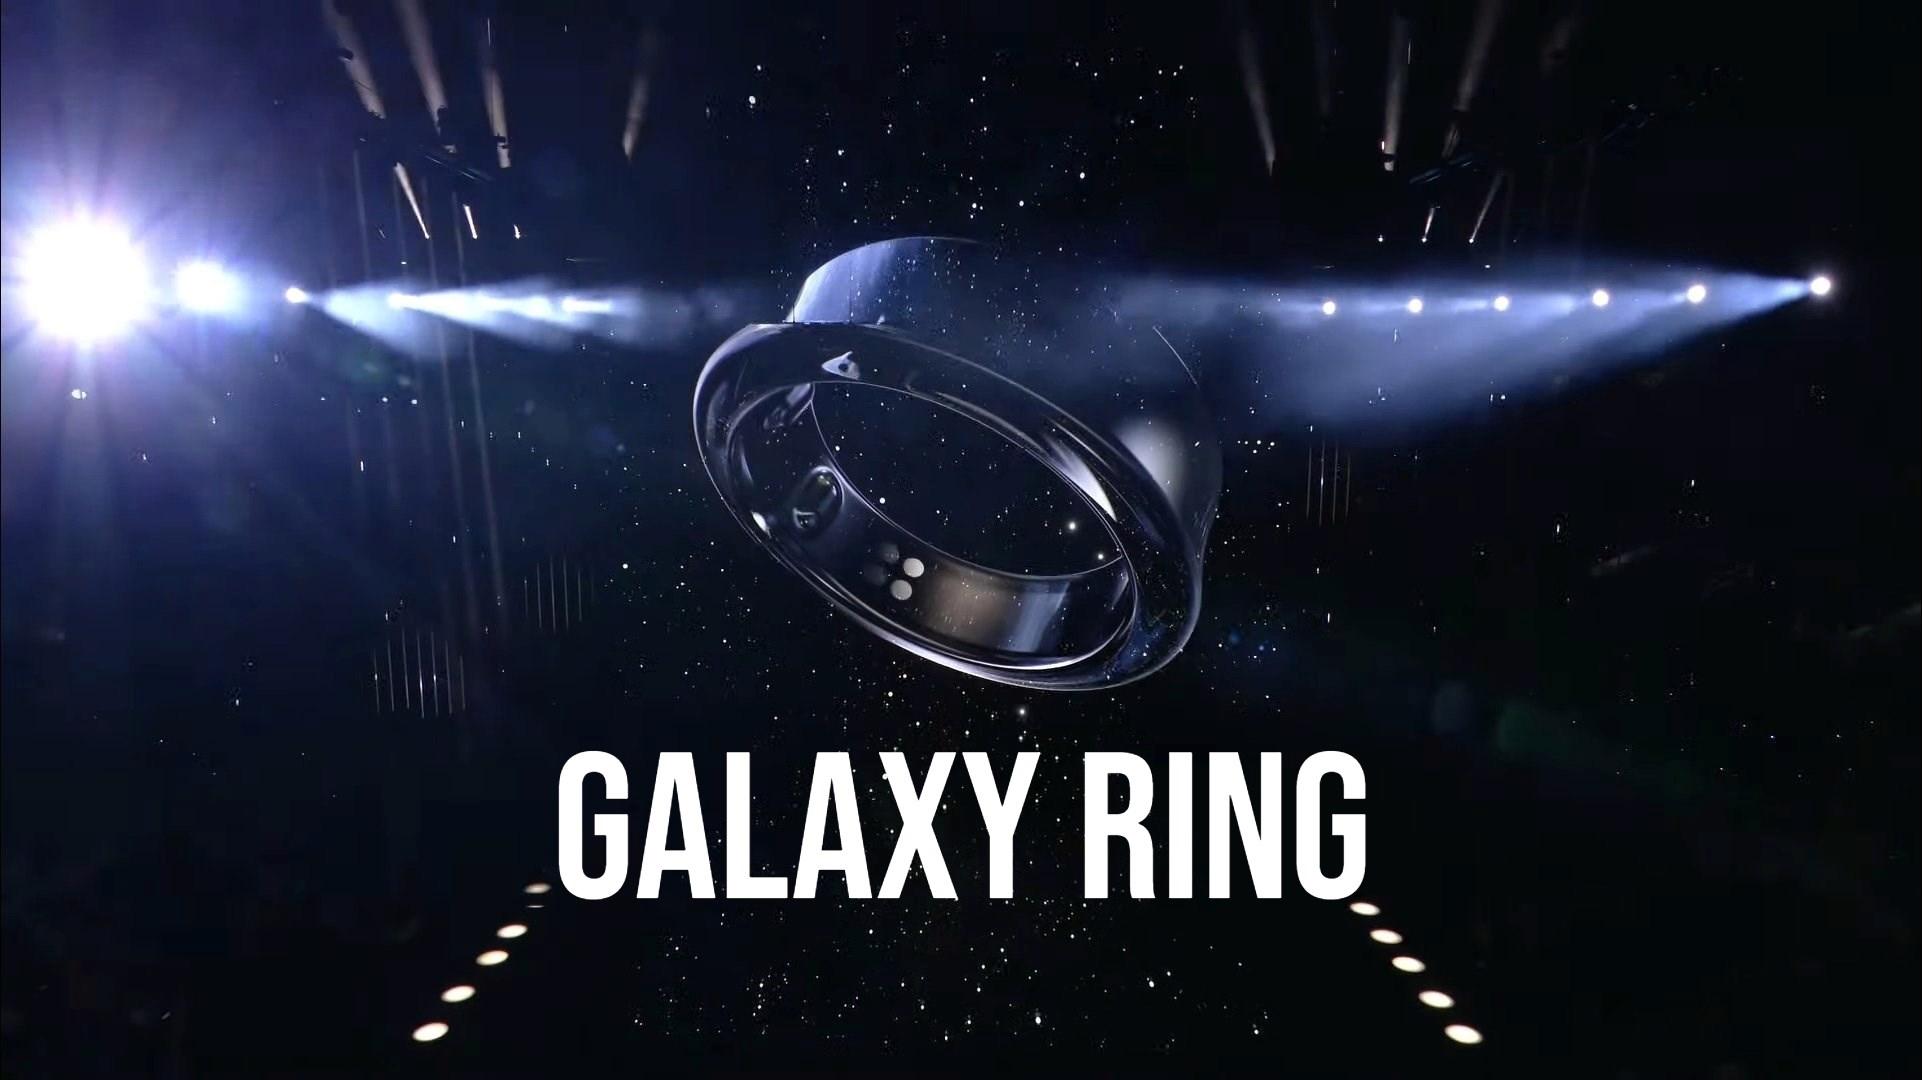 “Sadece Samsung yapabilir”: Karşınızda giyilebilir Galaxy Ring!